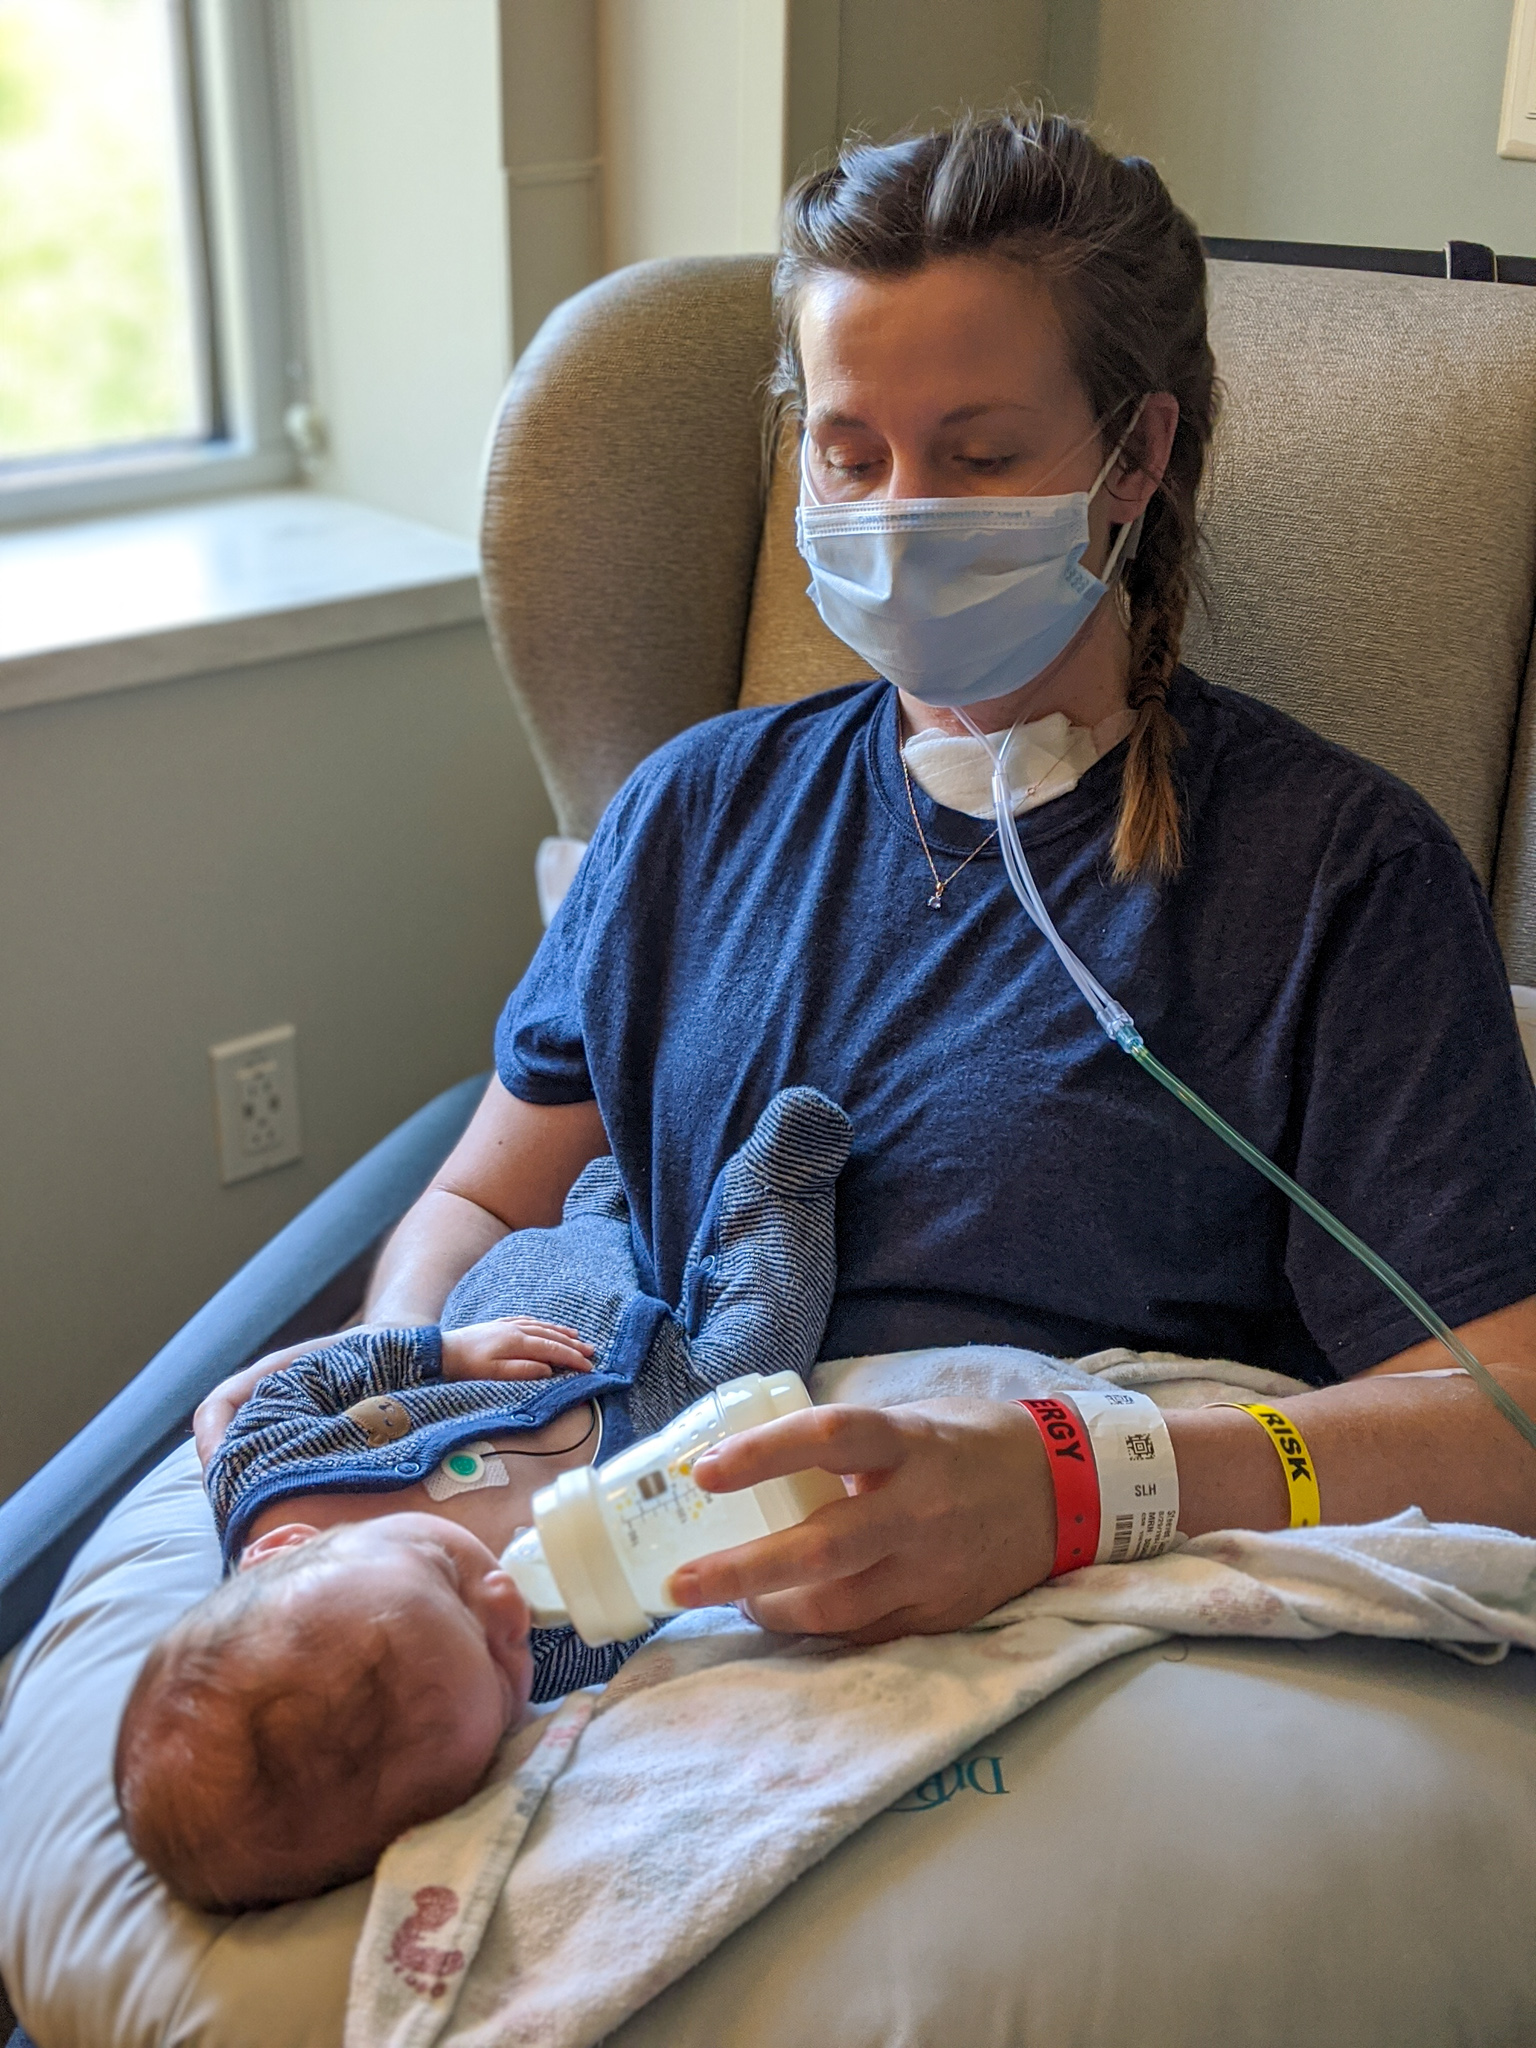 Laura Steeves bottle feeding her baby after being taken off ventilator